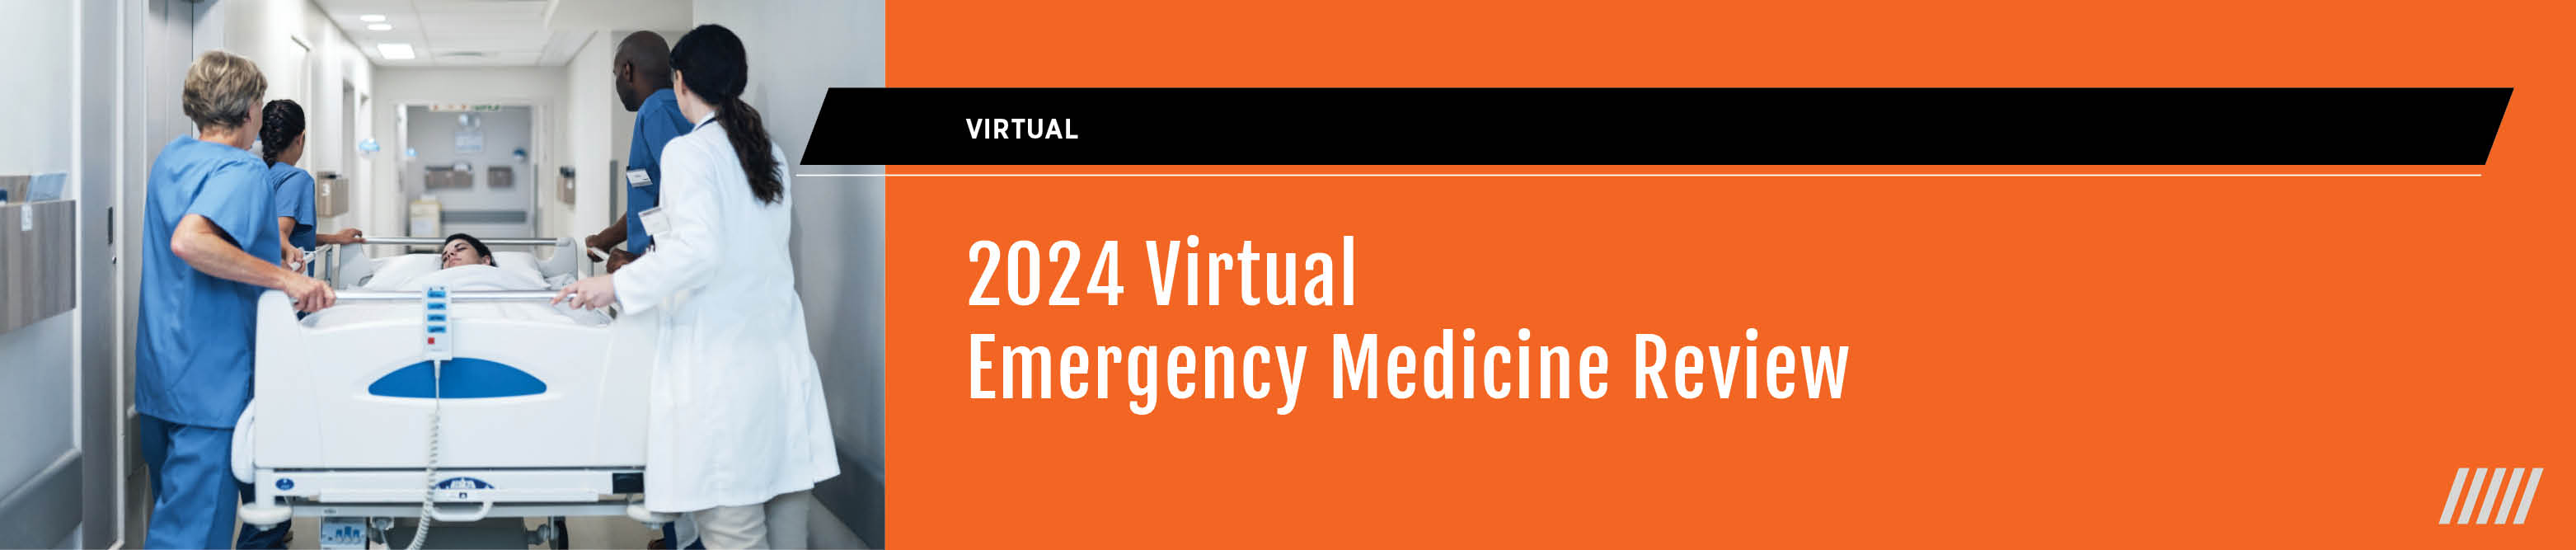 2024 Virtual Emergency Medicine Review Banner